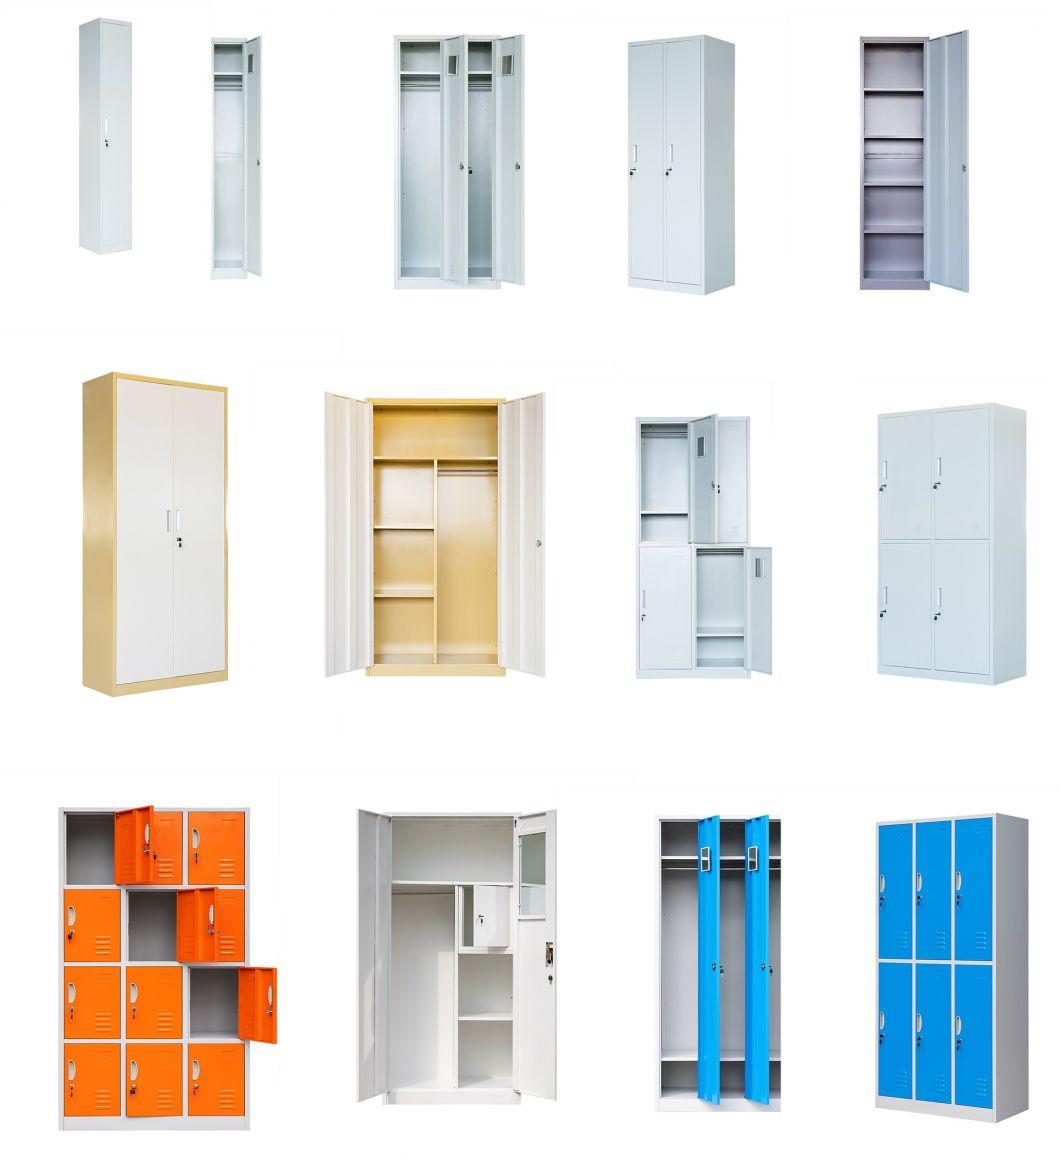 Best Seller Document Storage Cabinet Steel Vertical File Cabinet